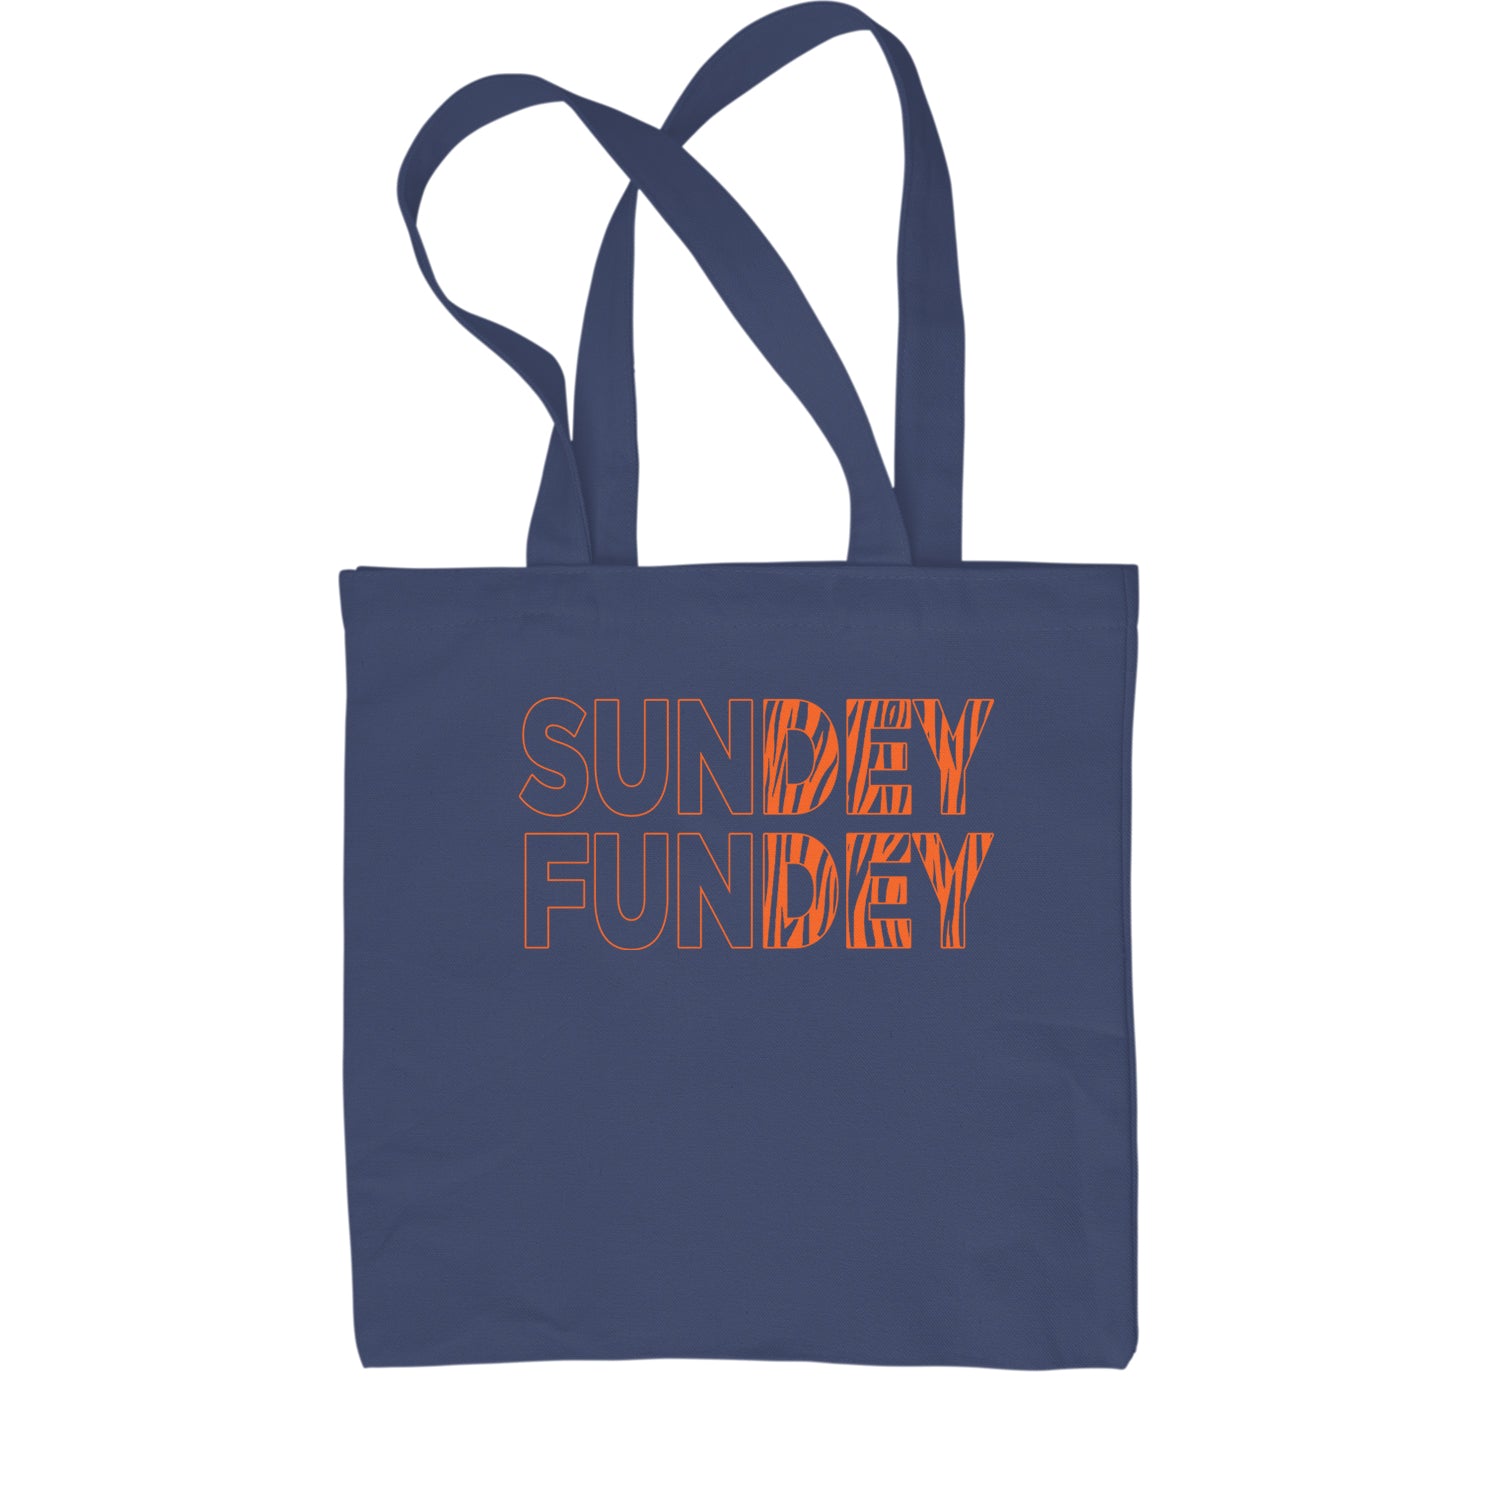 SunDEY FunDEY Sunday Funday Shopping Tote Bag ball, burrow, dey, foot, football, joe, ohio, sports, who by Expression Tees